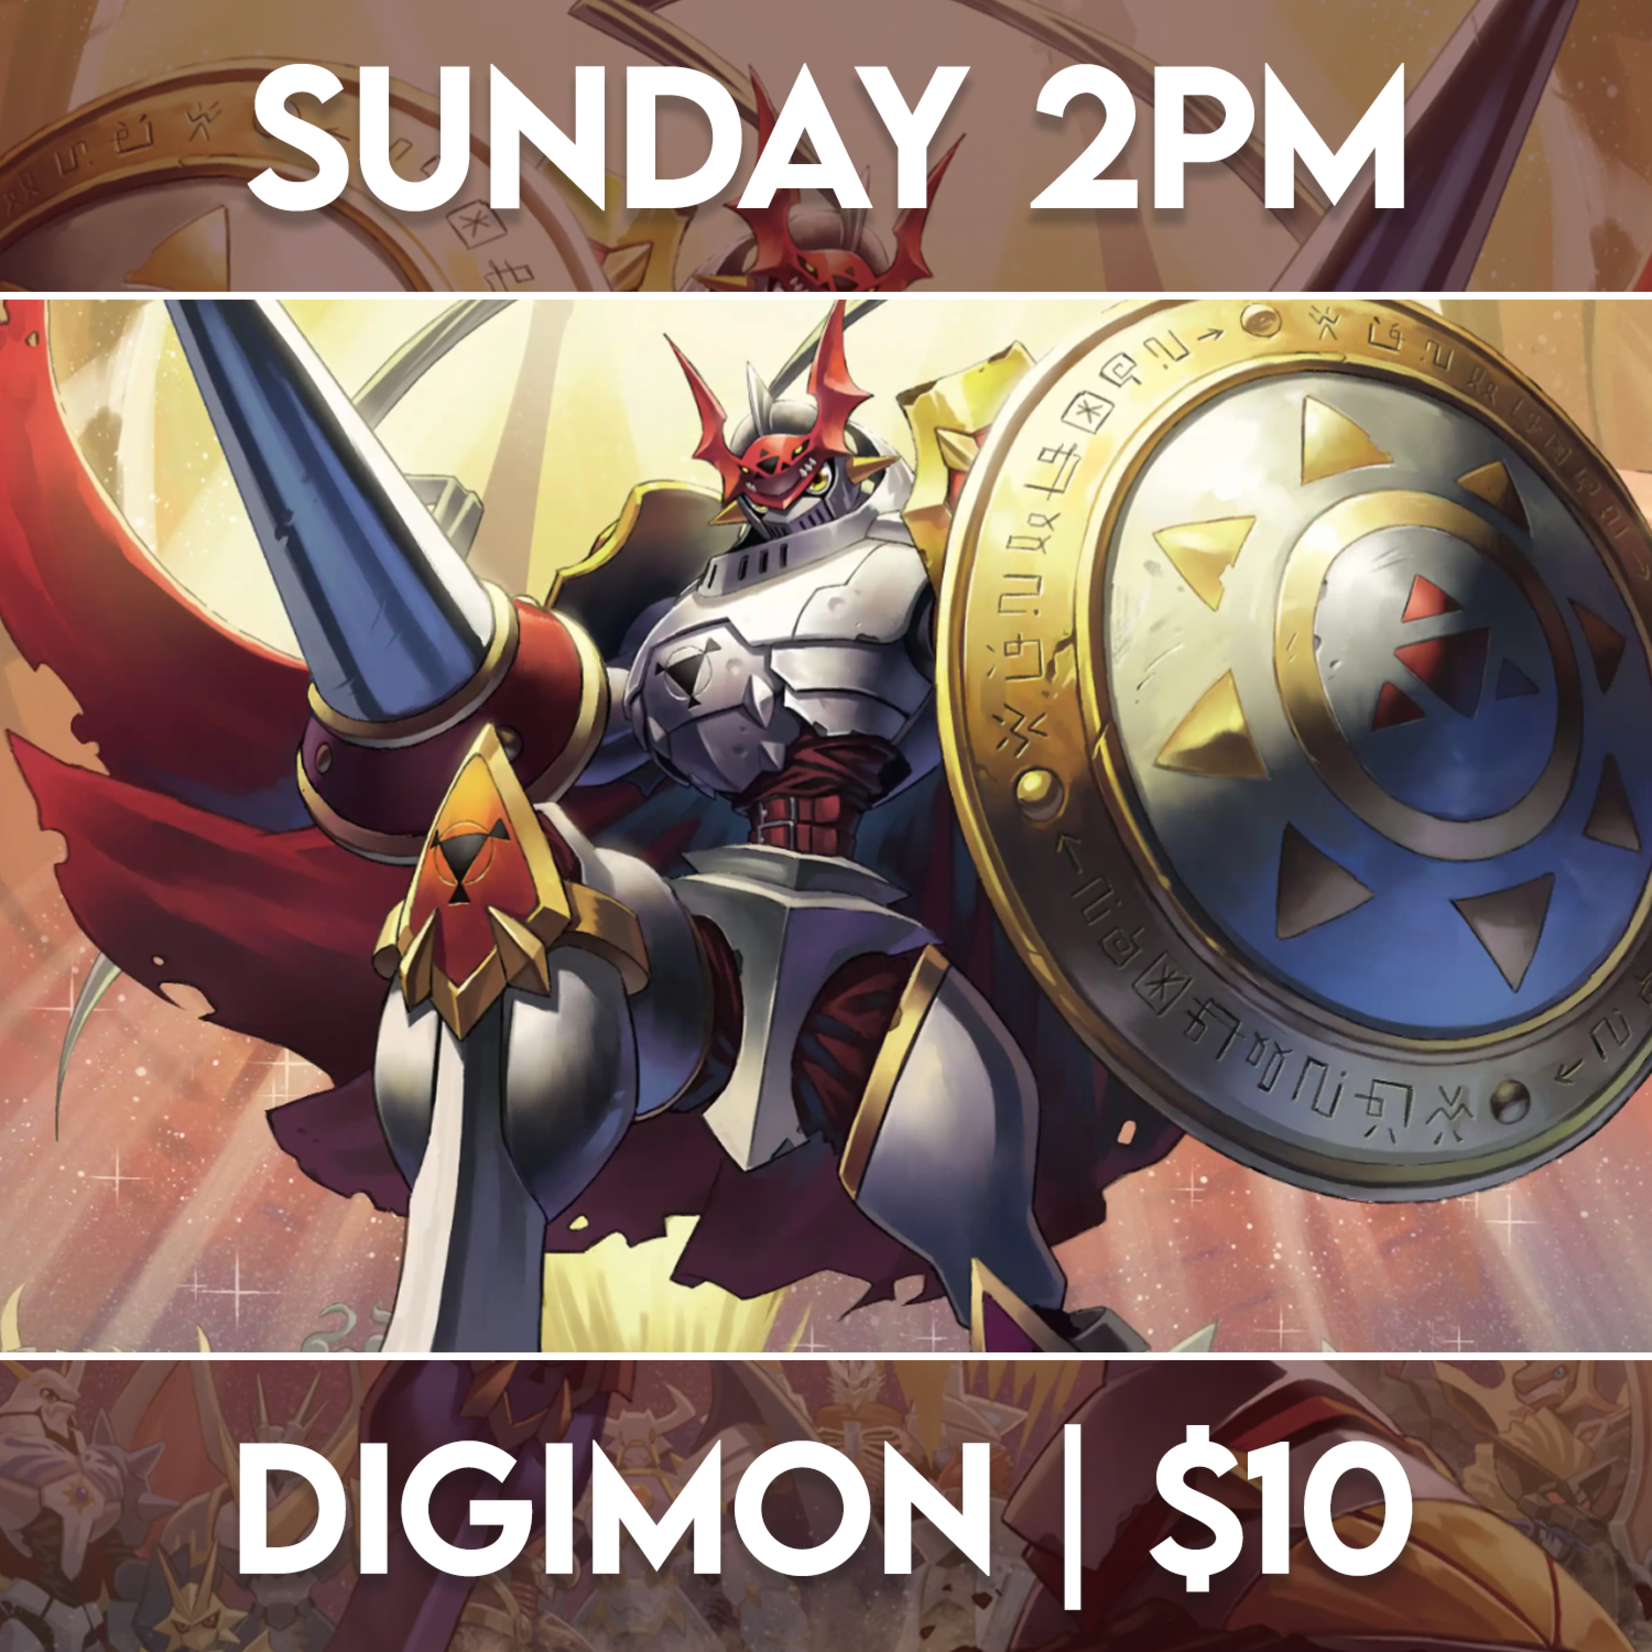 12/04 Sunday @ 2 PM - Digimon